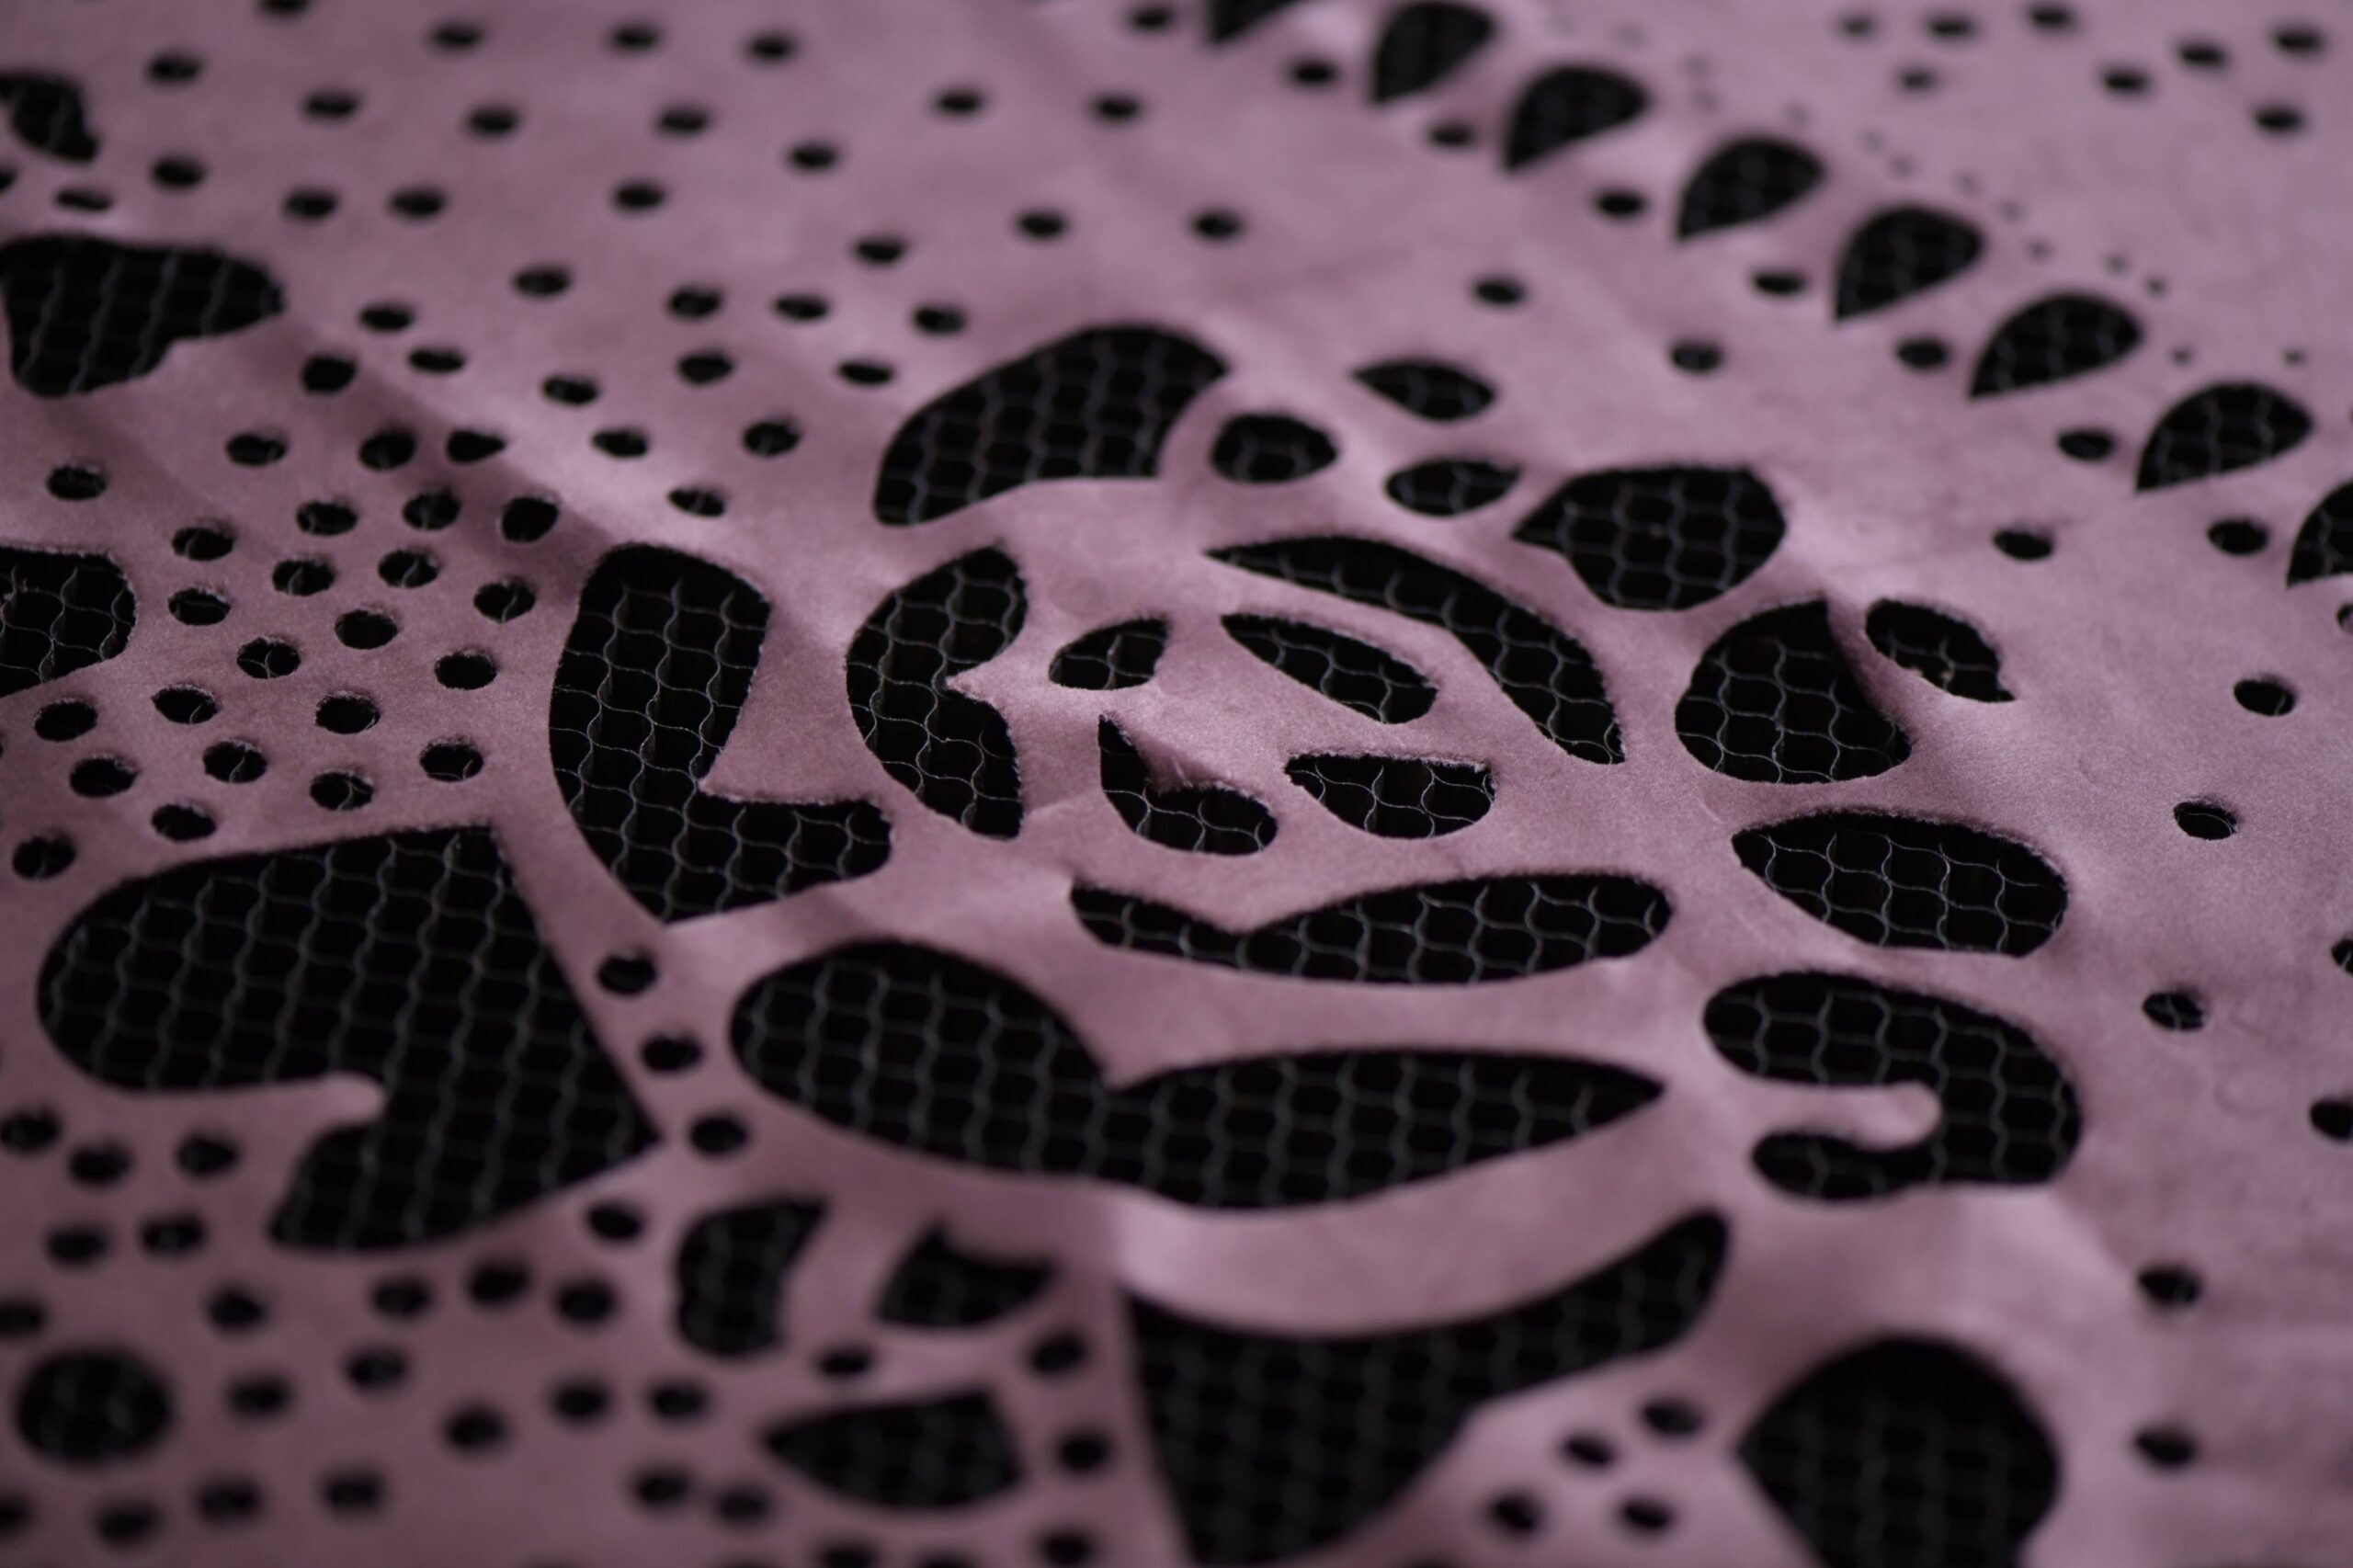 Laser-cutting pattern on fabric